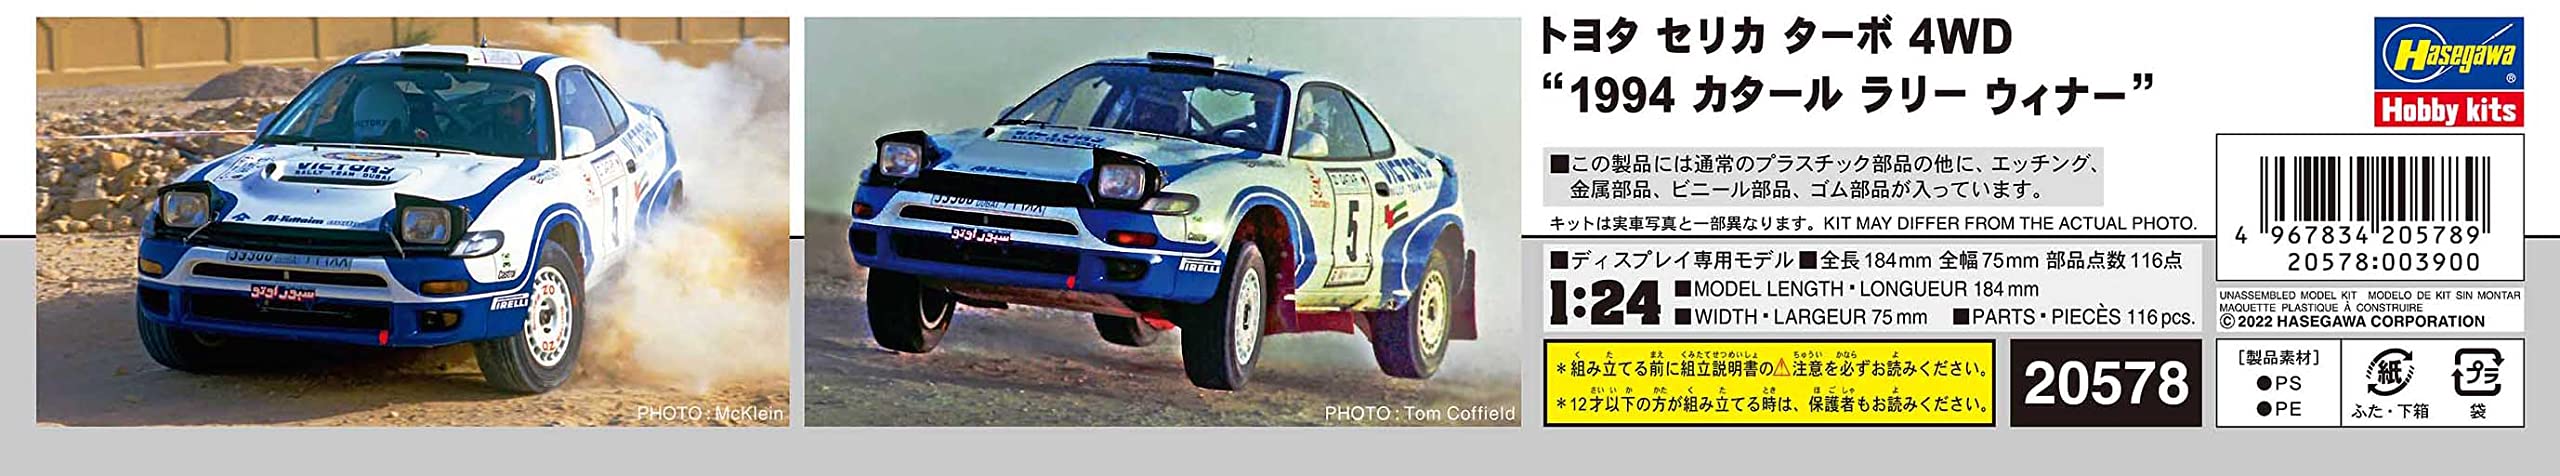 HASEGAWA 1/24 Toyota Celica Turbo 4Wd '1994 Qatar Rally Winner' Kunststoffmodell